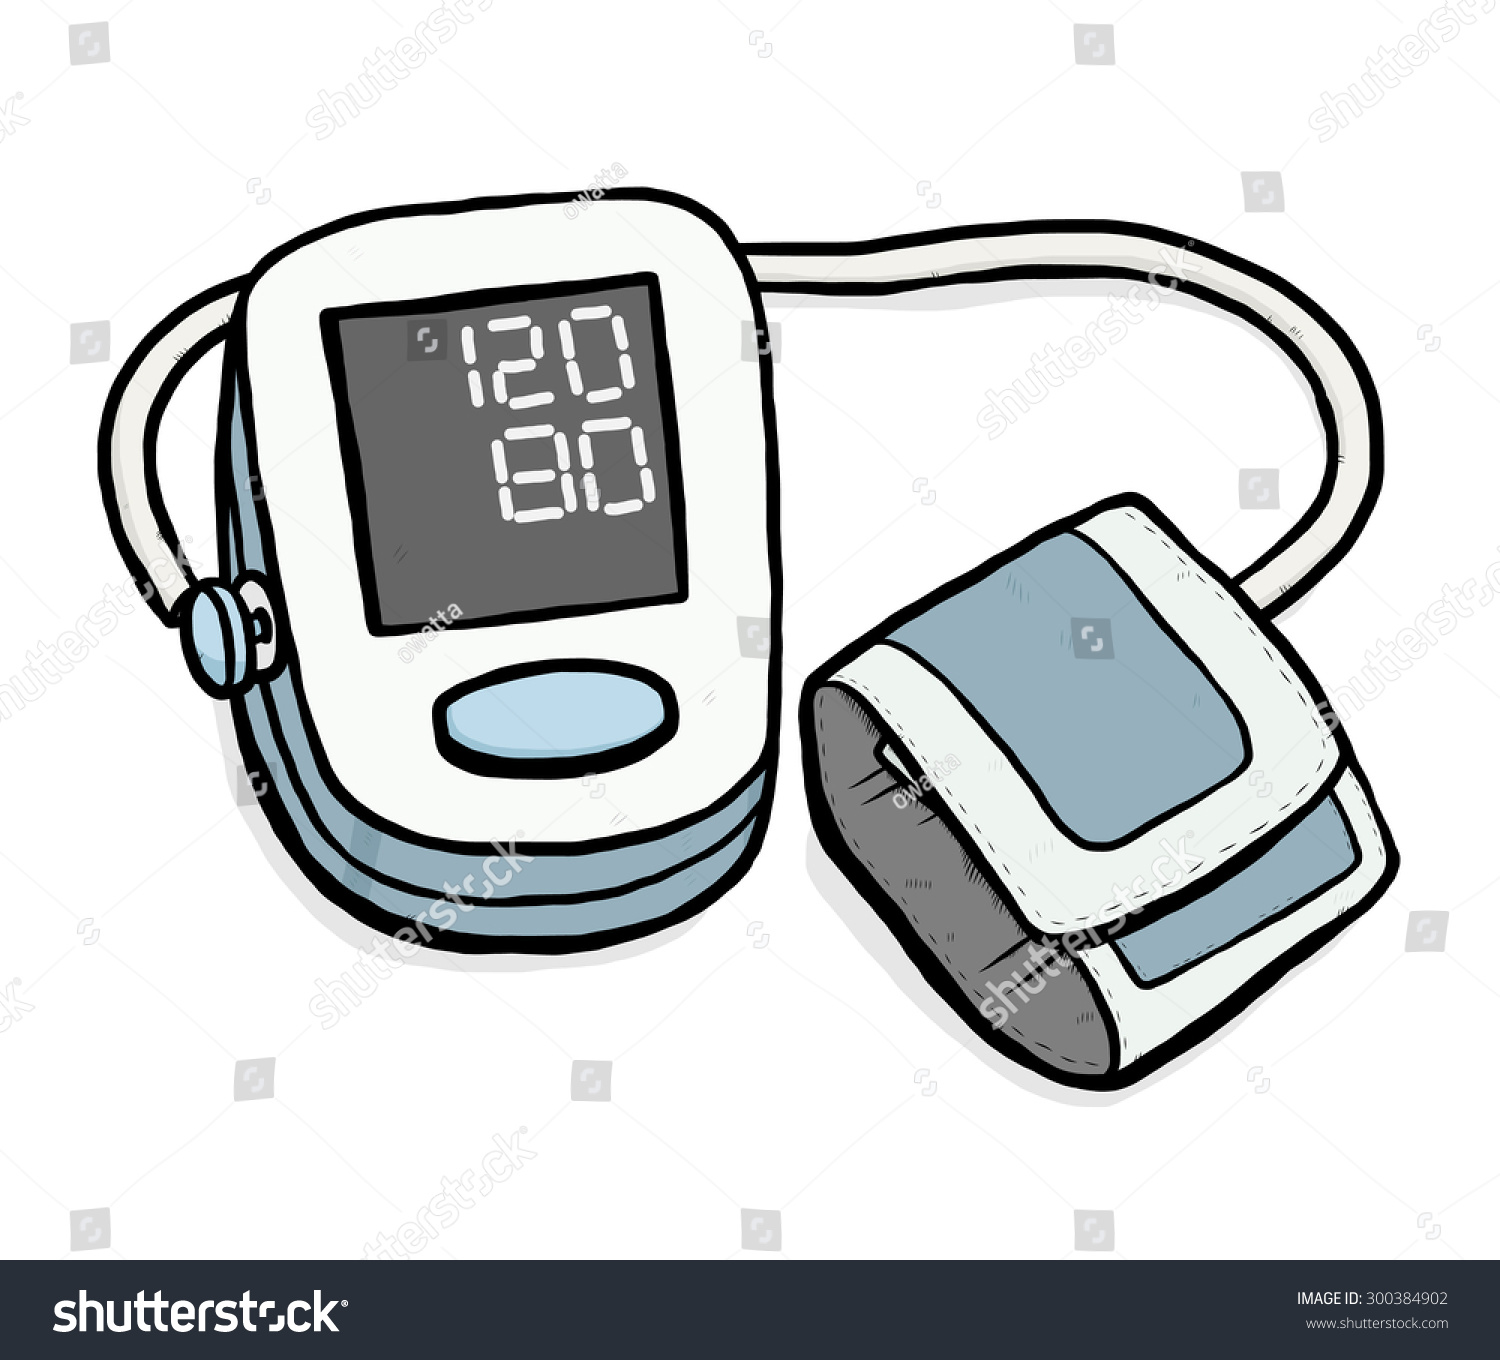 clipart high blood pressure - photo #43